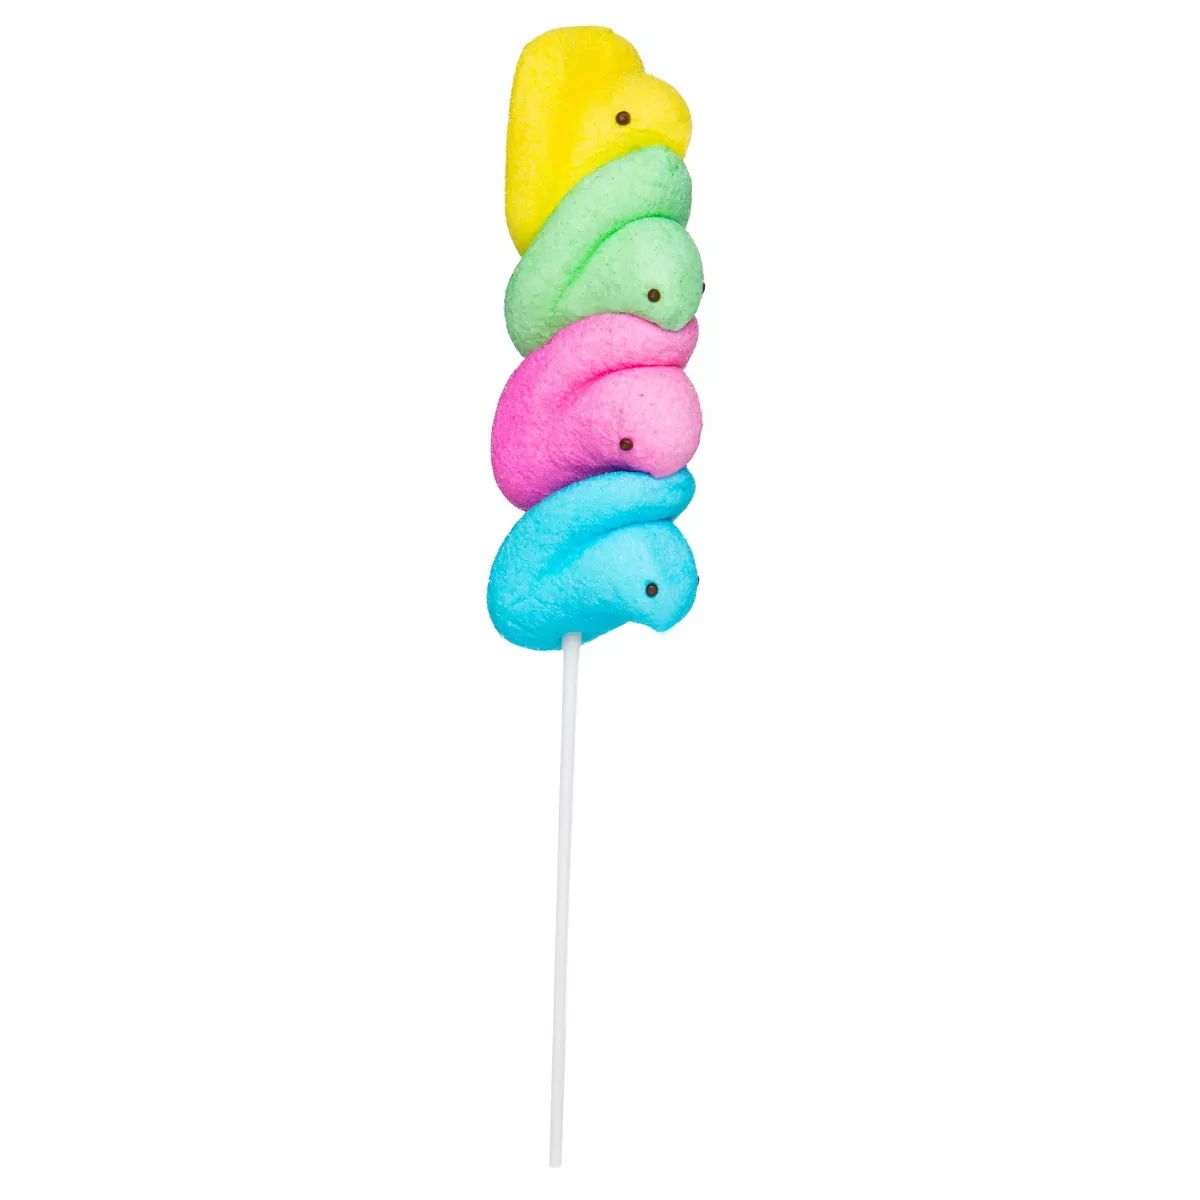 Peeps Easter Rainbow Marshmallow Chick Pop - 1.375oz | Target